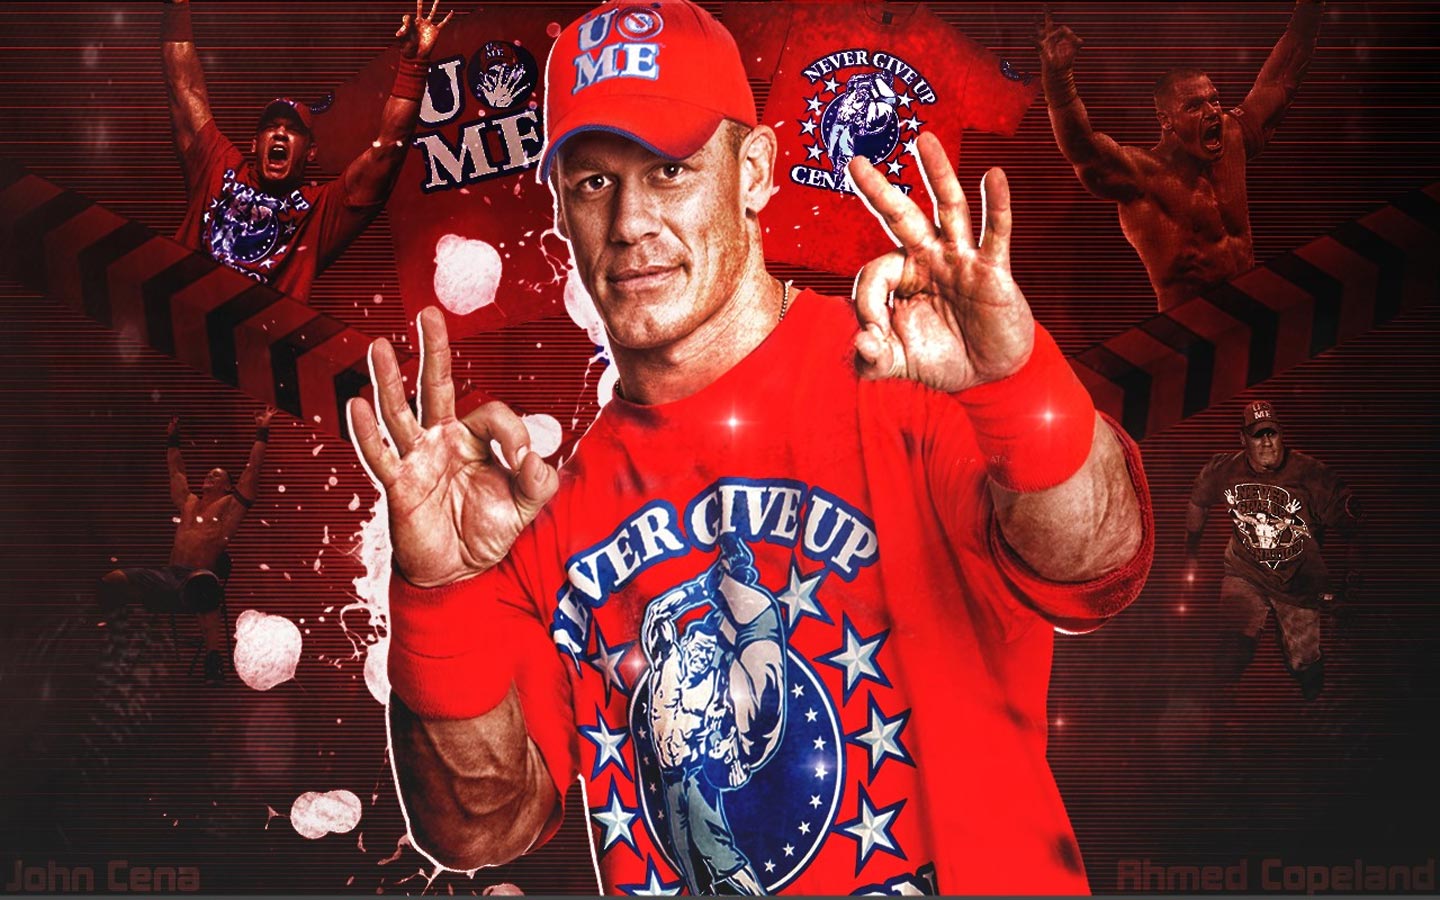 ALL SPORTS PLAYERS Wwe John Cena New HD Wallpapers 2013